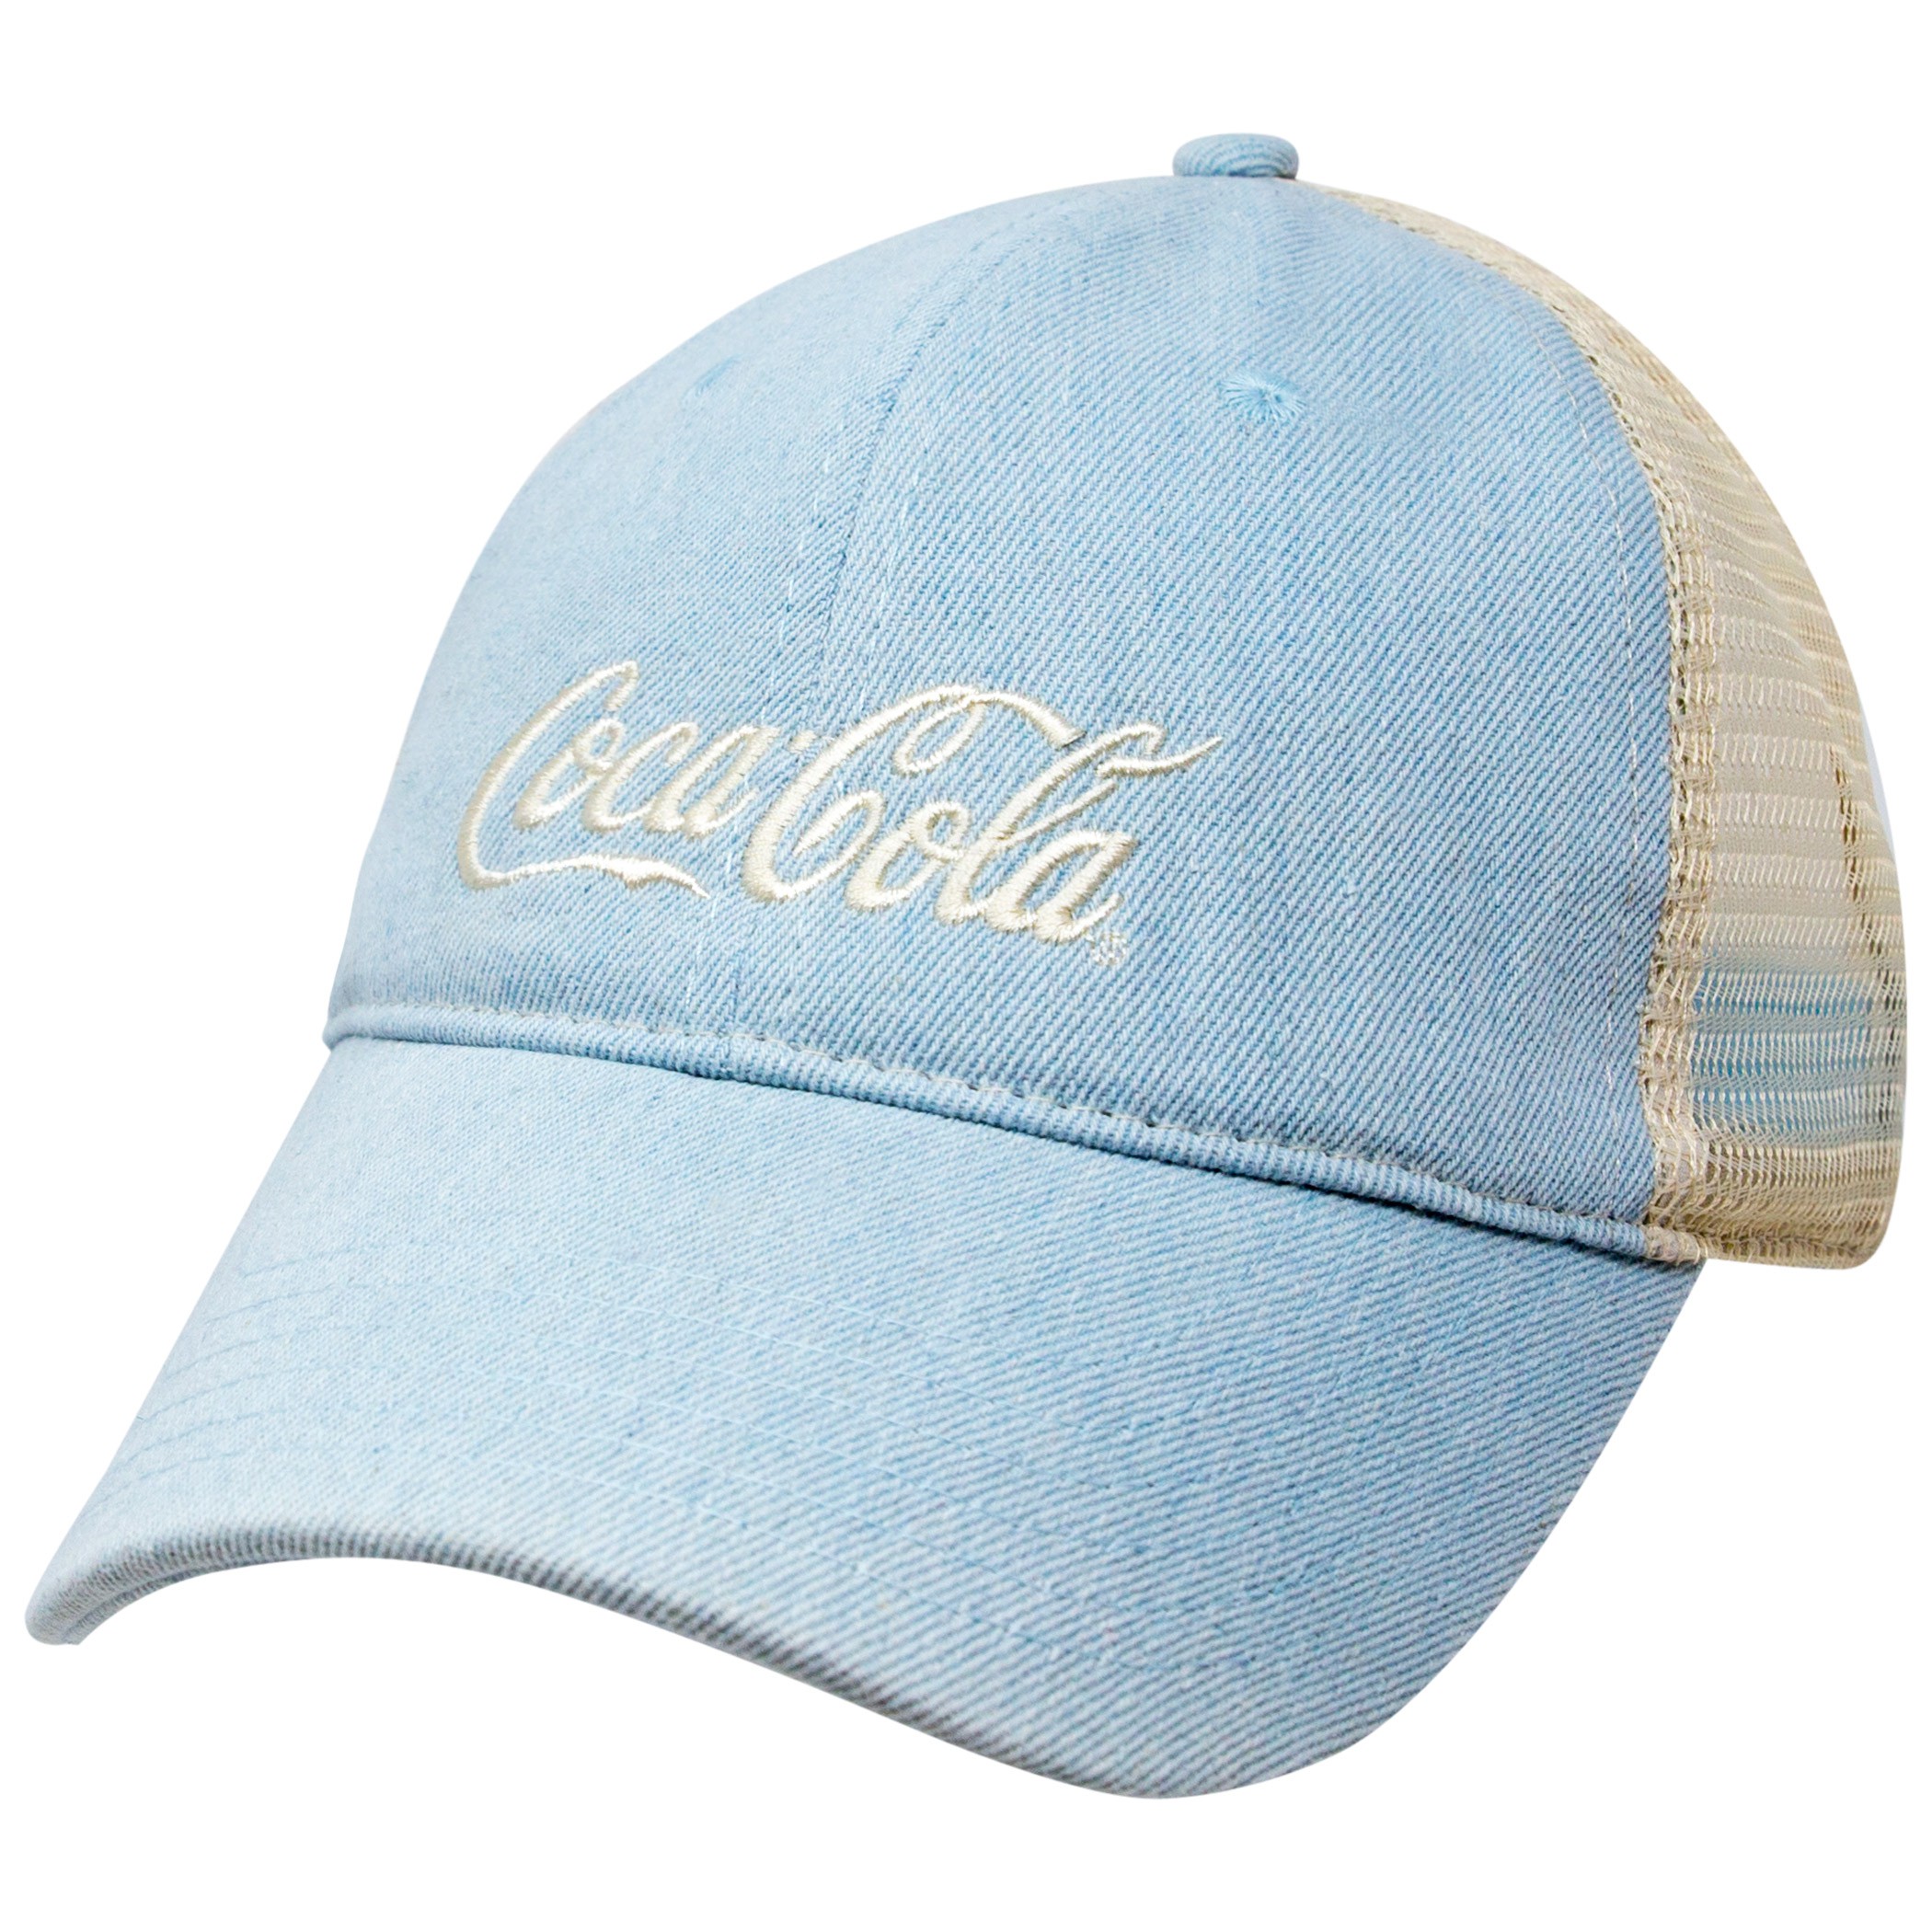 Coca-Cola Baby Blue Distressed Trucker Hat